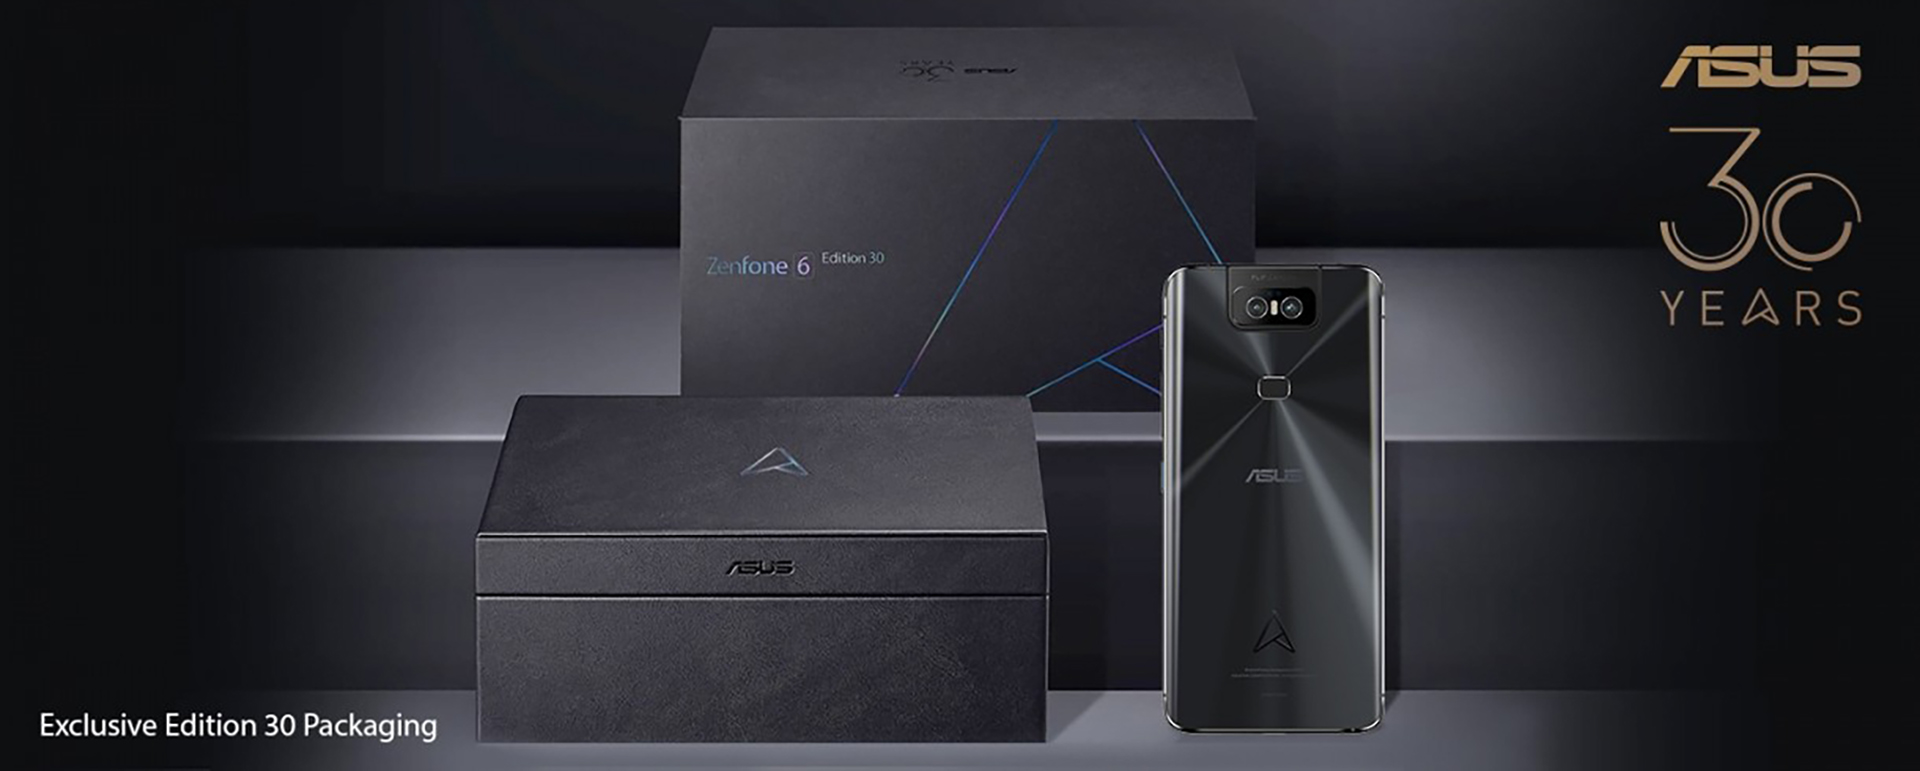 Asus Zenfone 6 Edition 30 Packaging